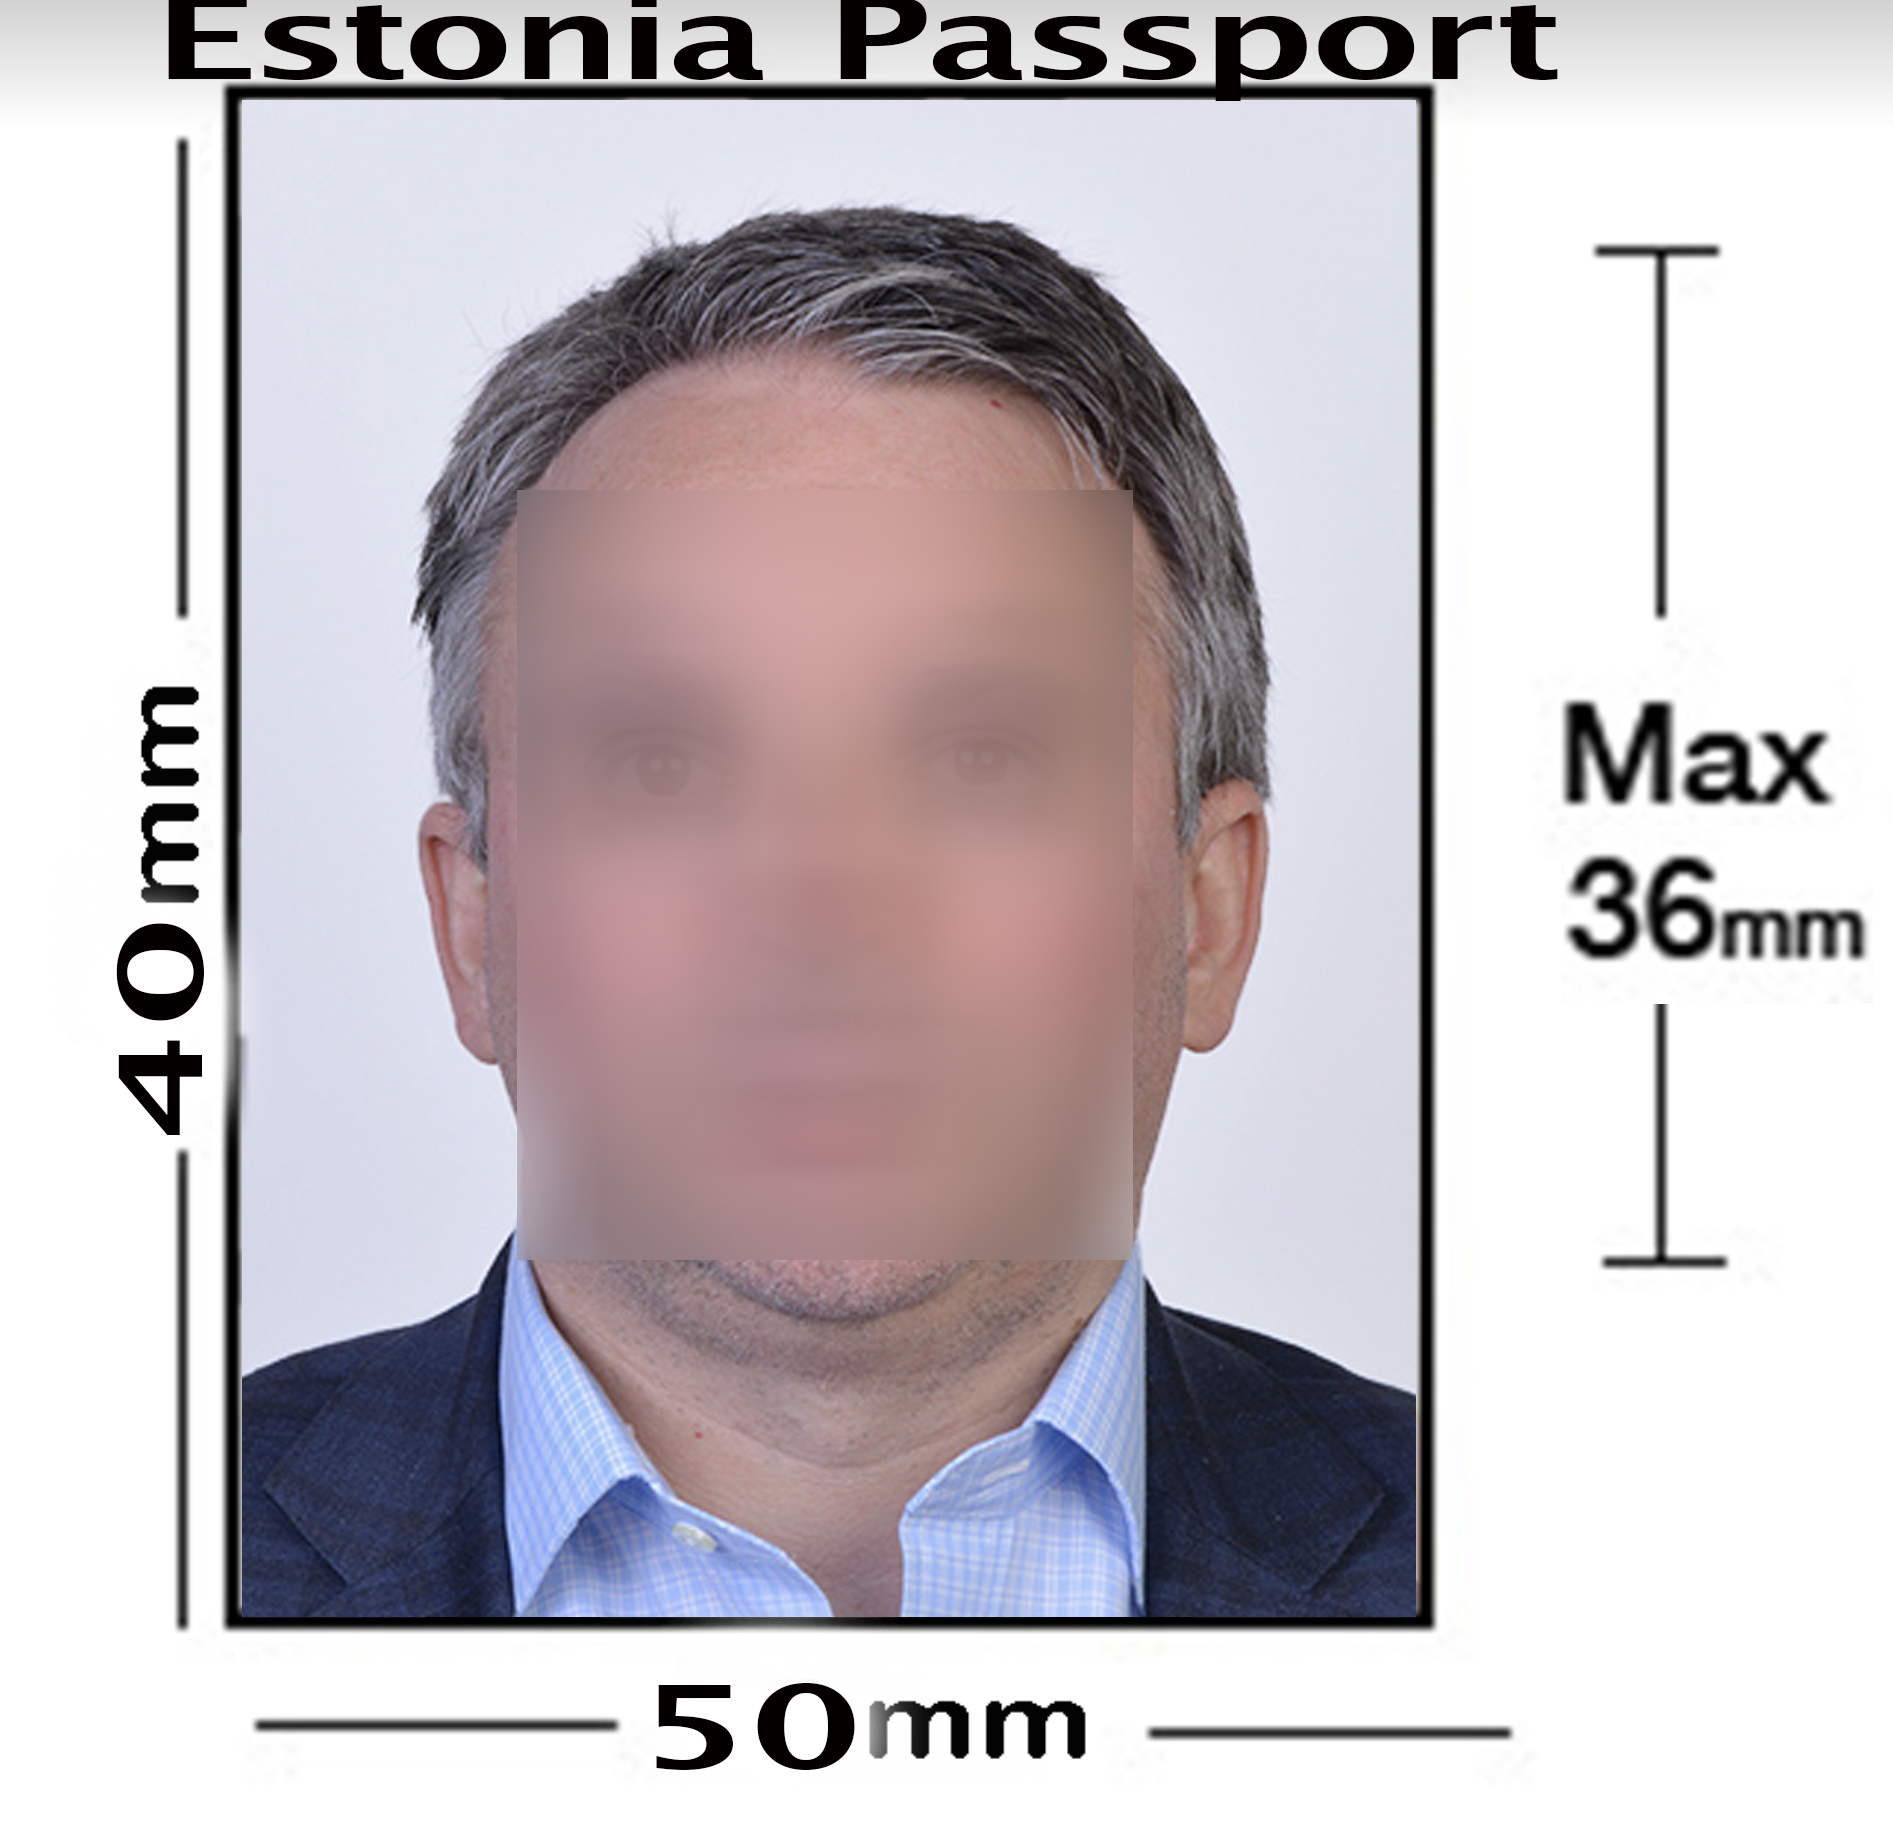 Estonia Passport Photo